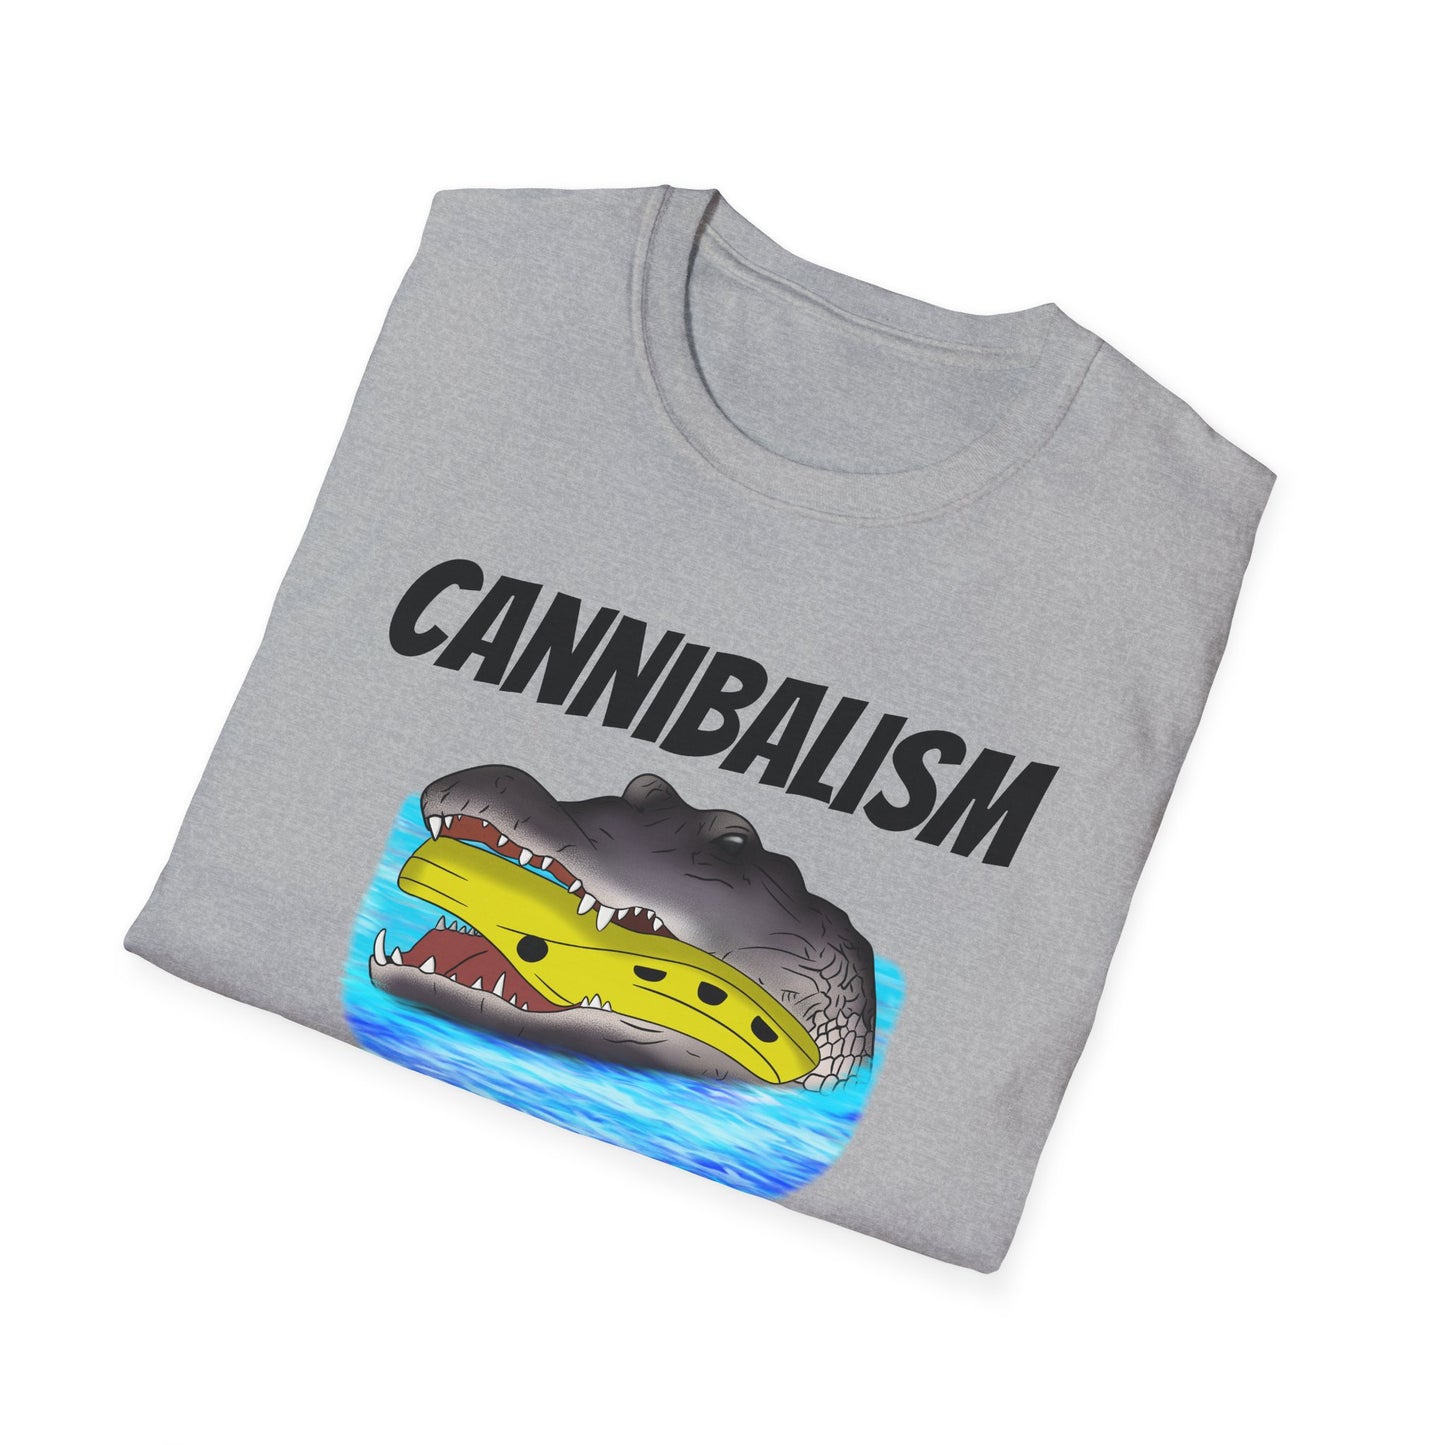 Cannibalism Shirt